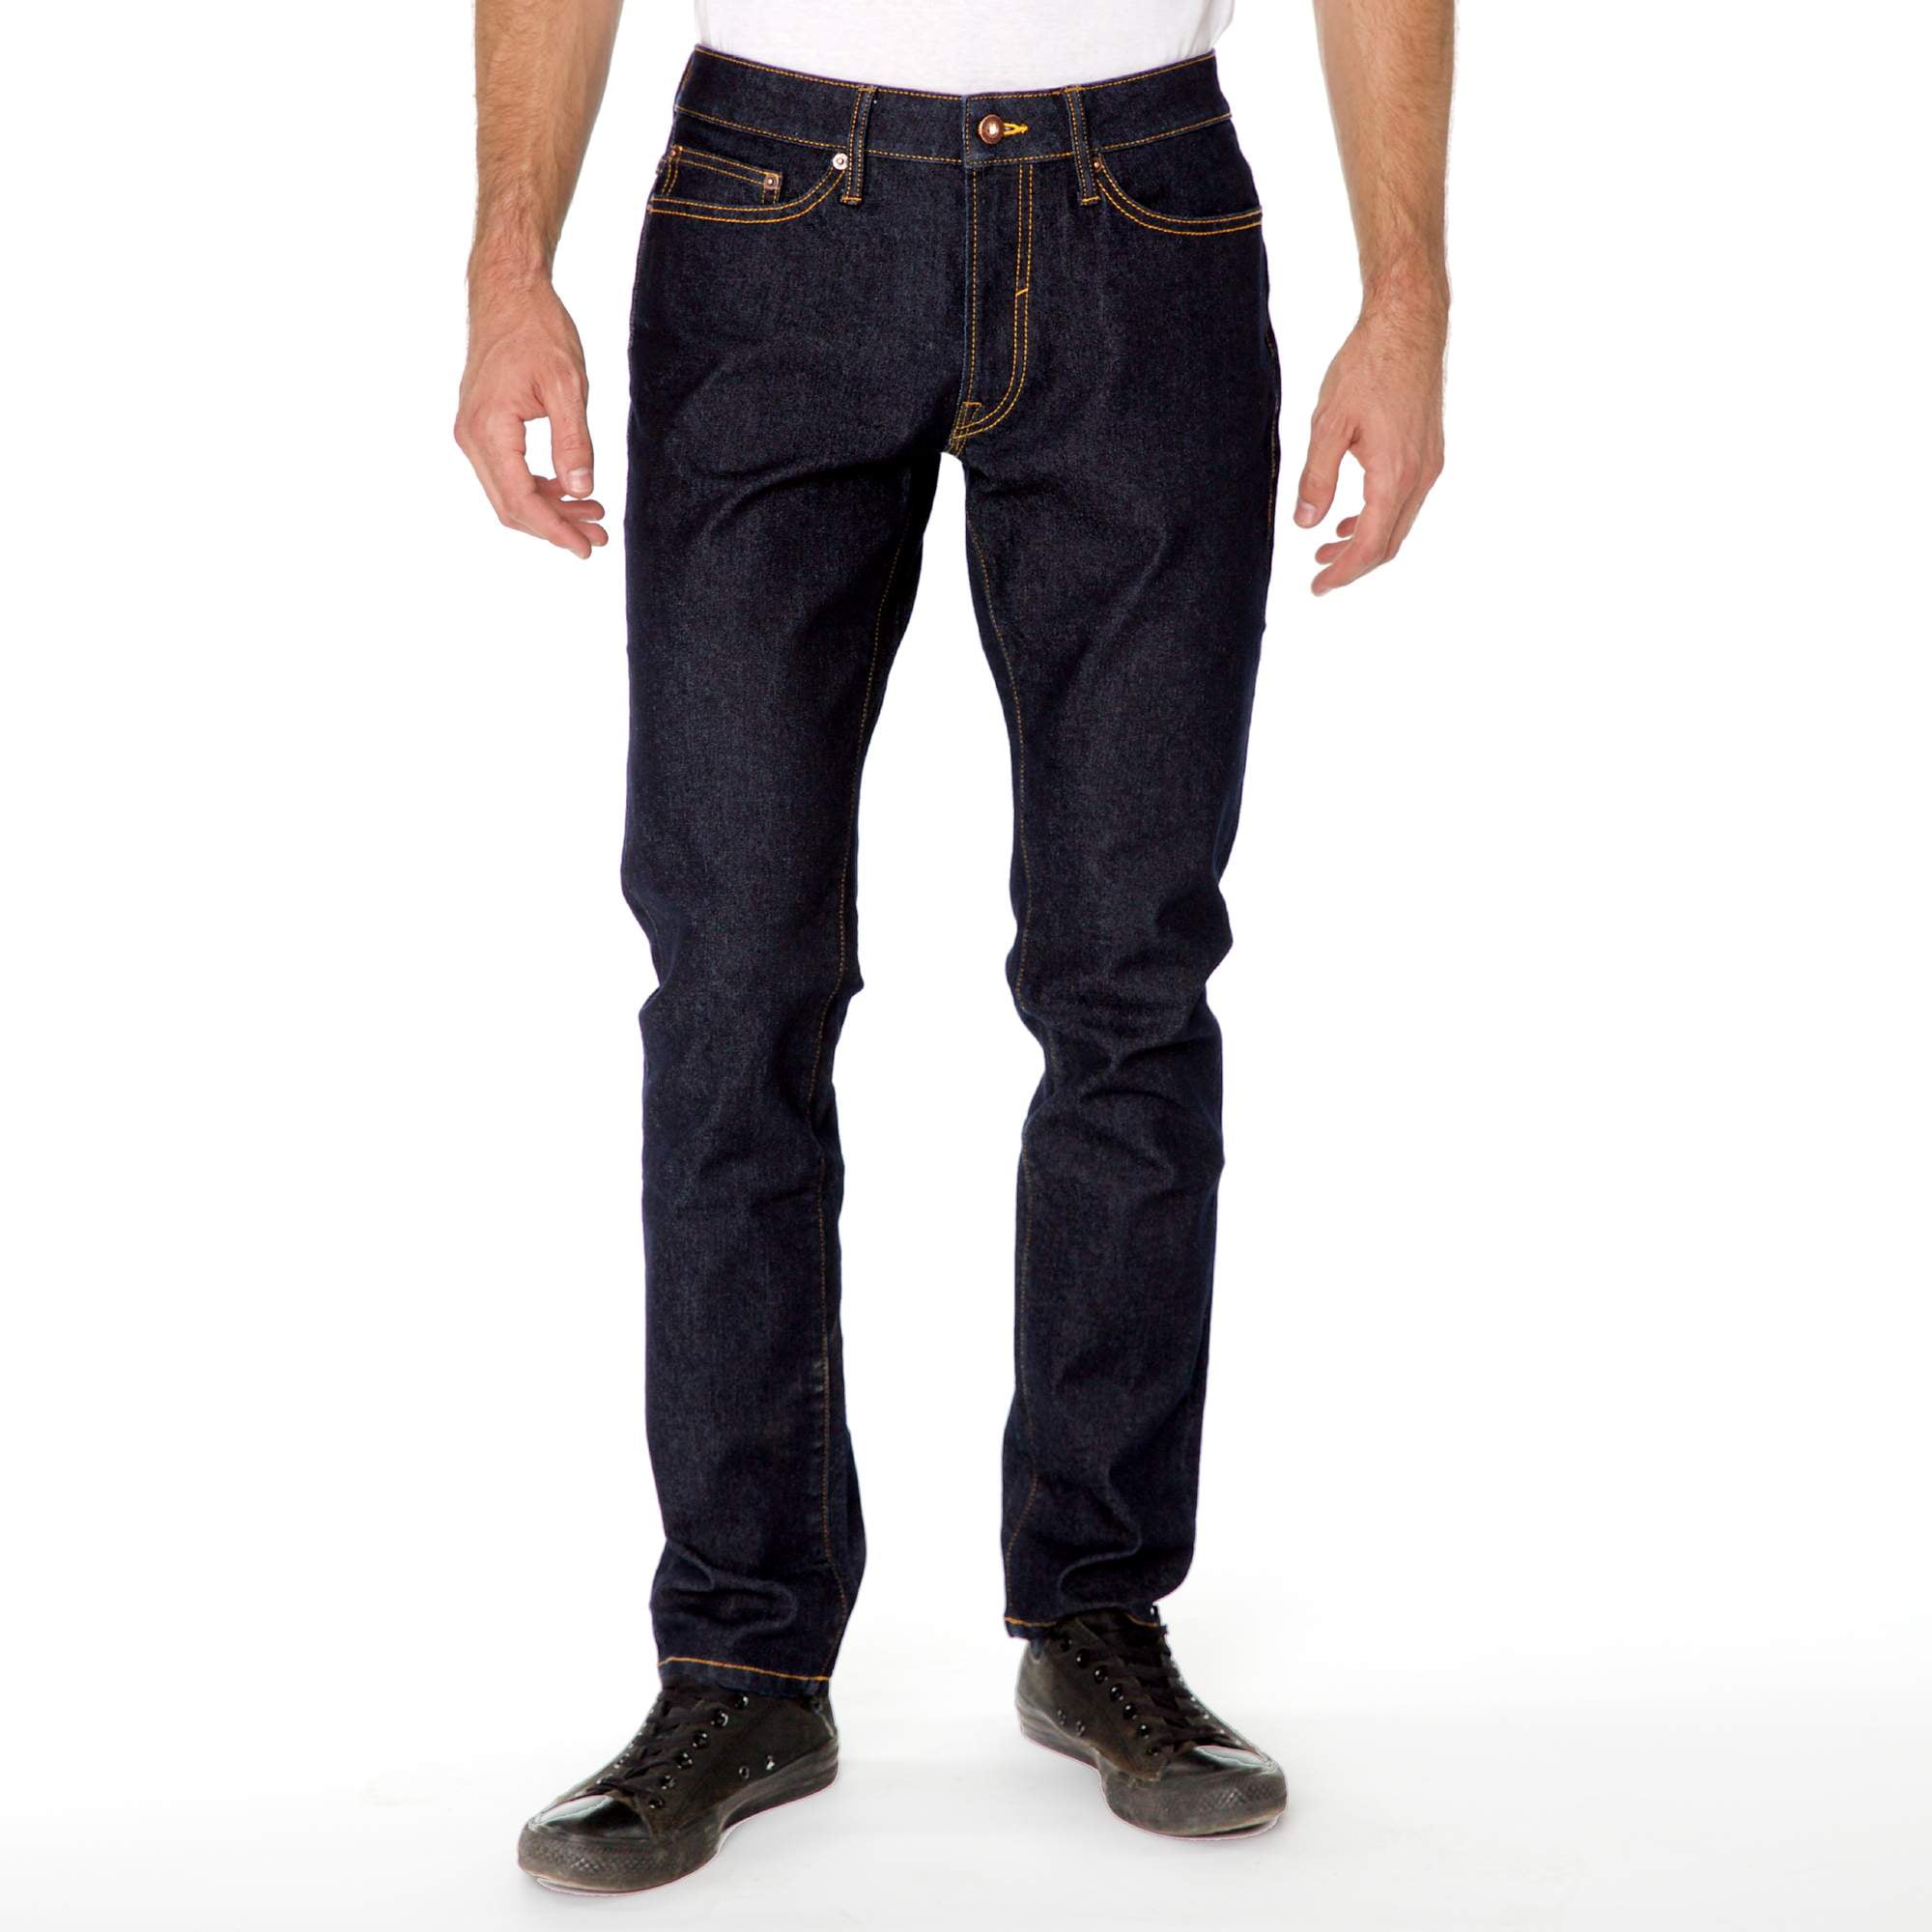 Fort Knox Men's Slim Fit Jeans with Stretch - Walmart.com